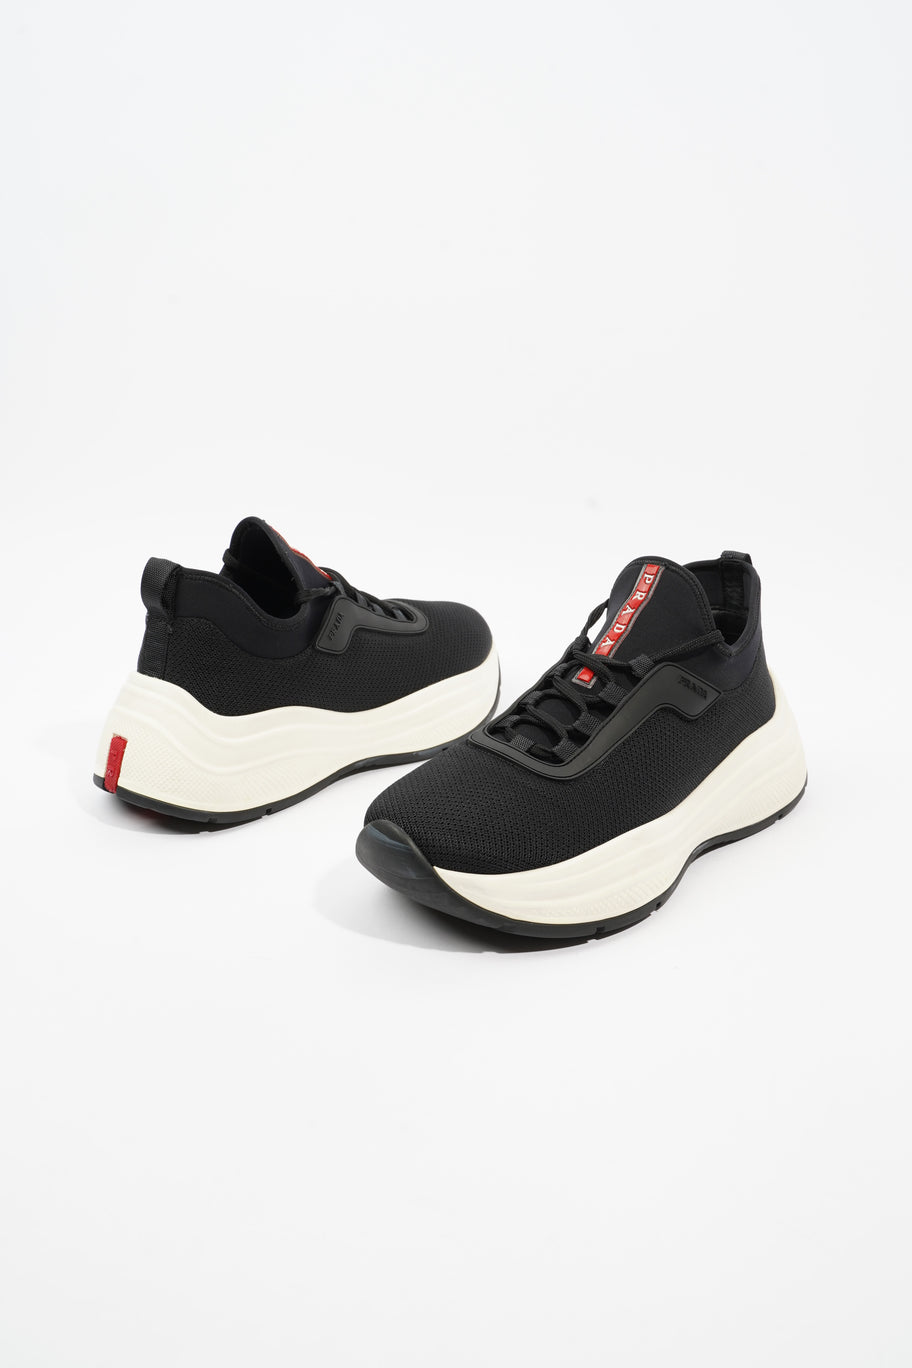 Neoprene Sneakers Black / Red Technical Fabric EU 40 UK 6 Image 9